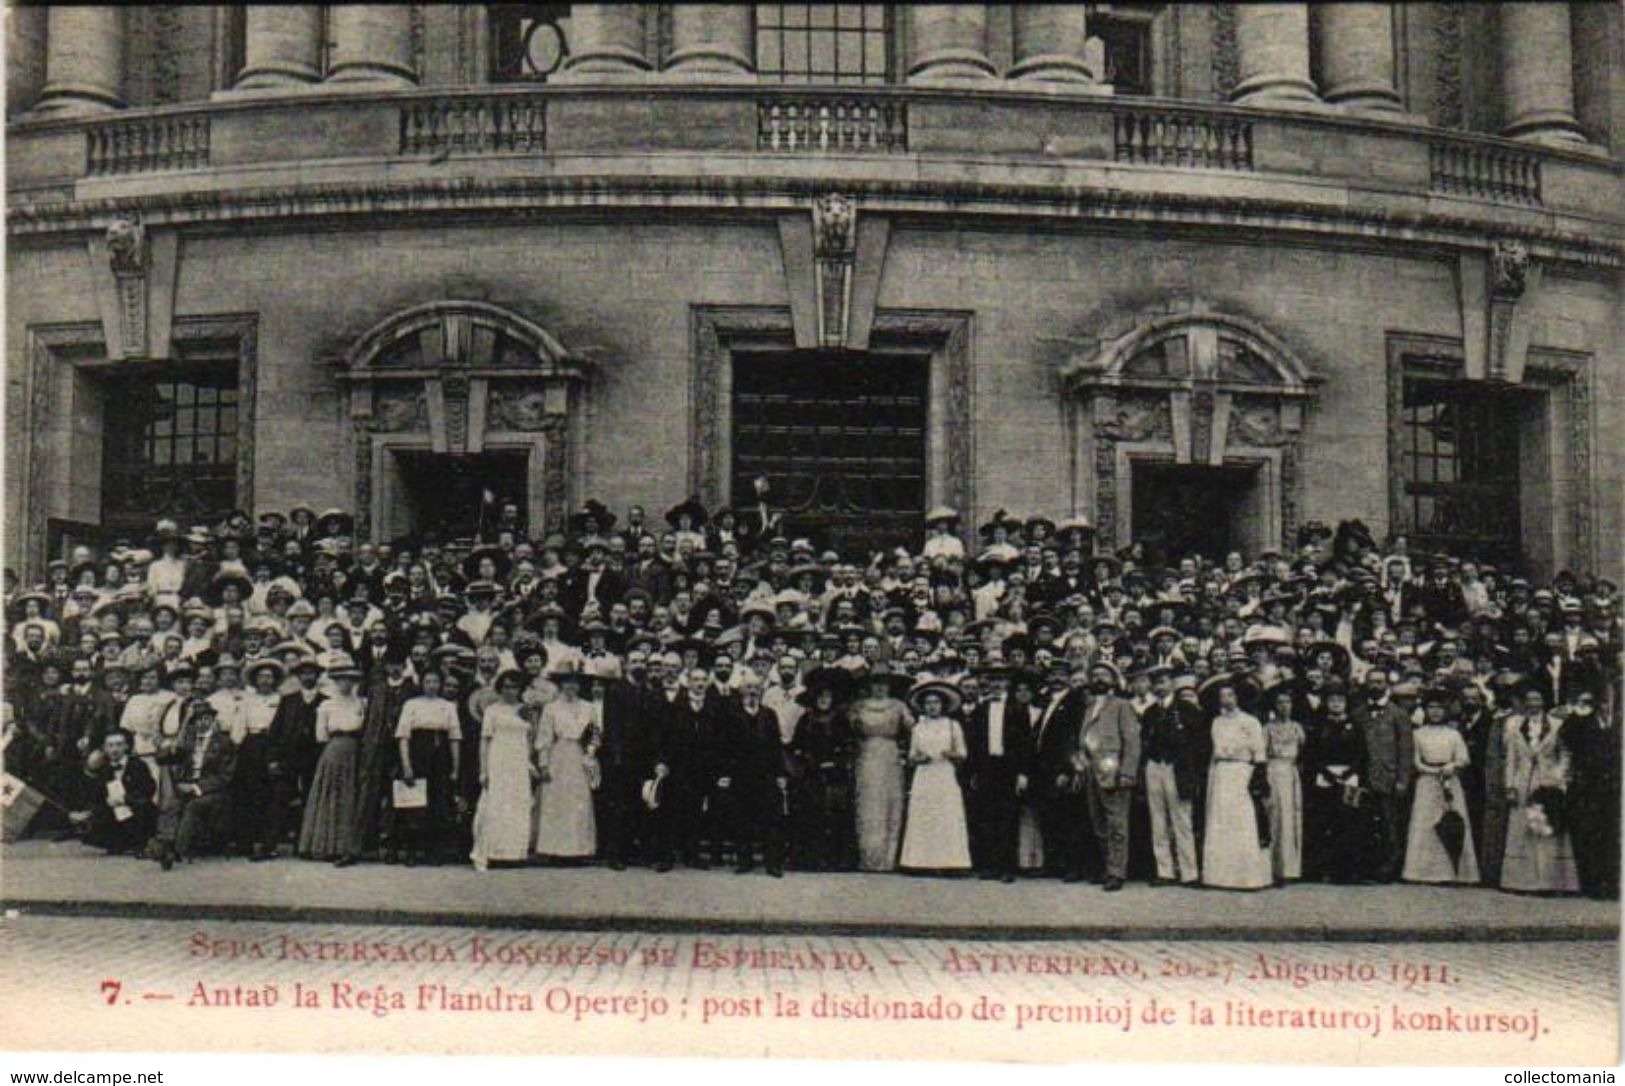 24 postcards SET Esperanto Kongreso Antverpeno 1911 Croix Rouge Ruga Kruco  American German Russian French  Group